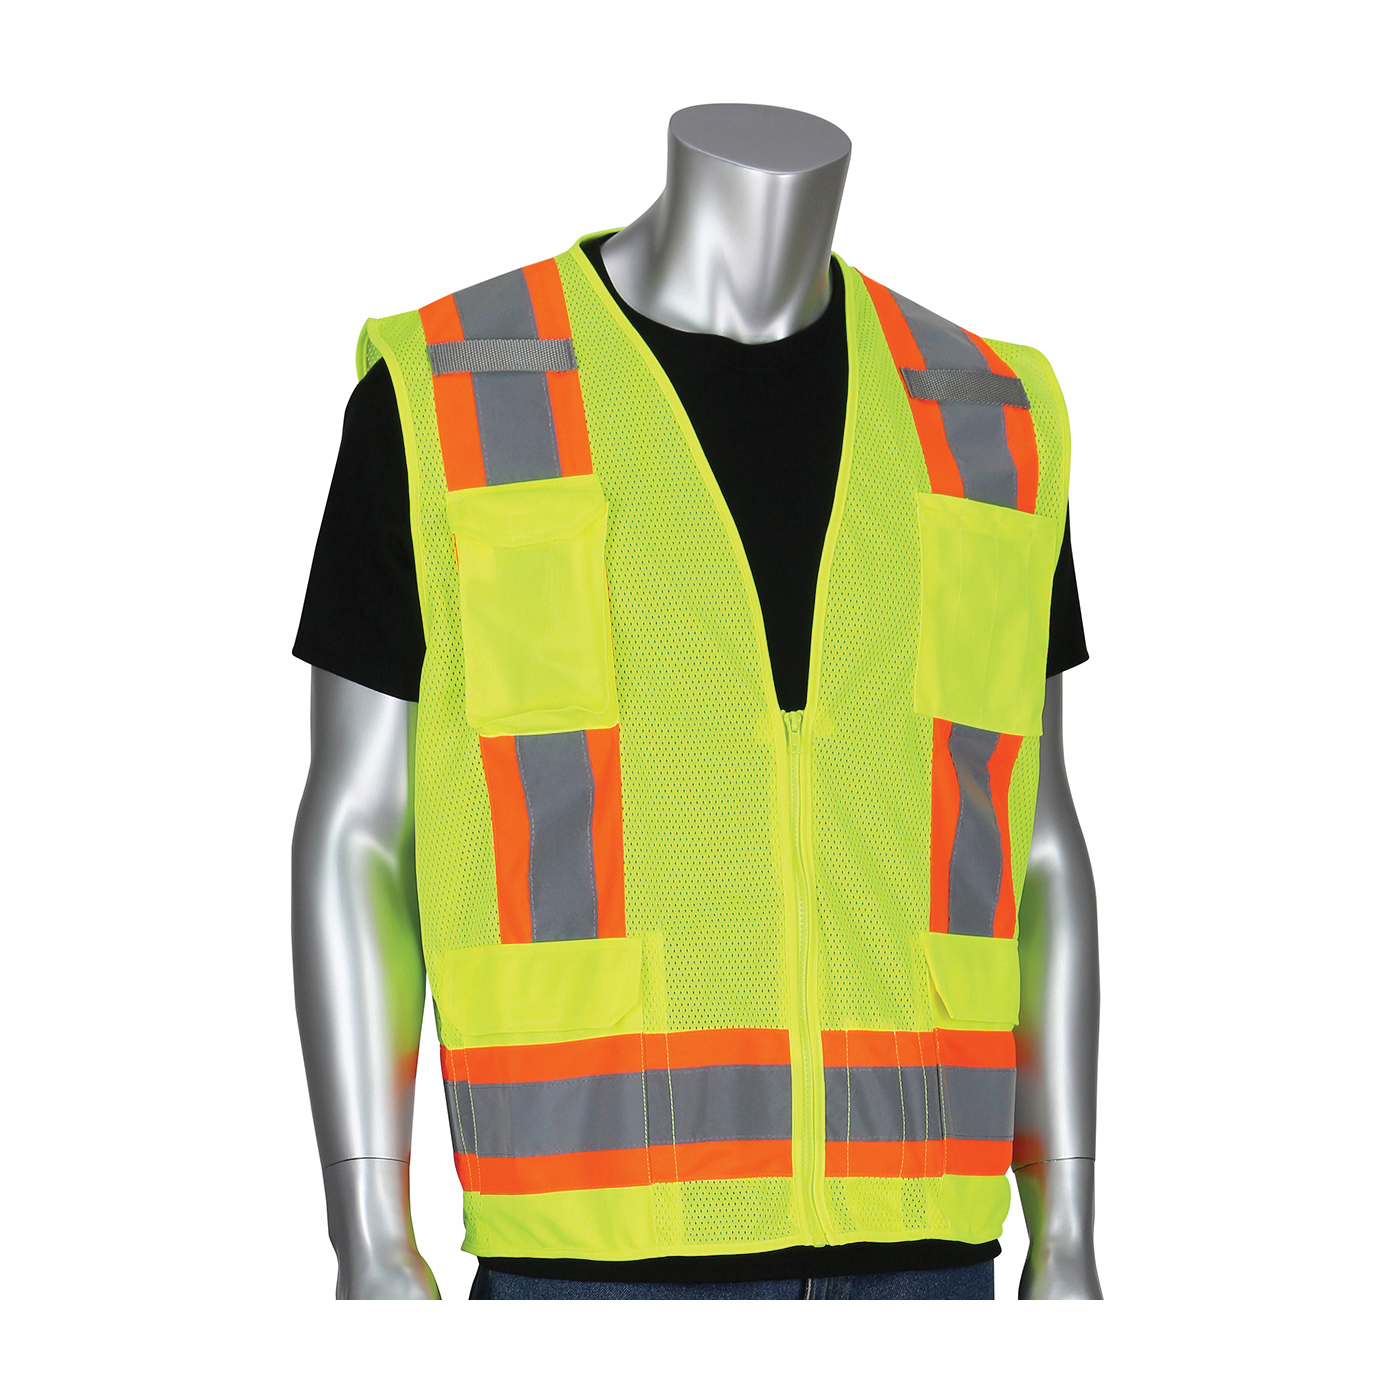 PIP® 302-0500M-LY/L 2-Tone Surveyor Safety Vest, L, Hi-Viz Lime Yellow, Polyester, Zipper Closure, 11 Pockets, ANSI Class: Class 2, Specifications Met: ANSI 107 Type R